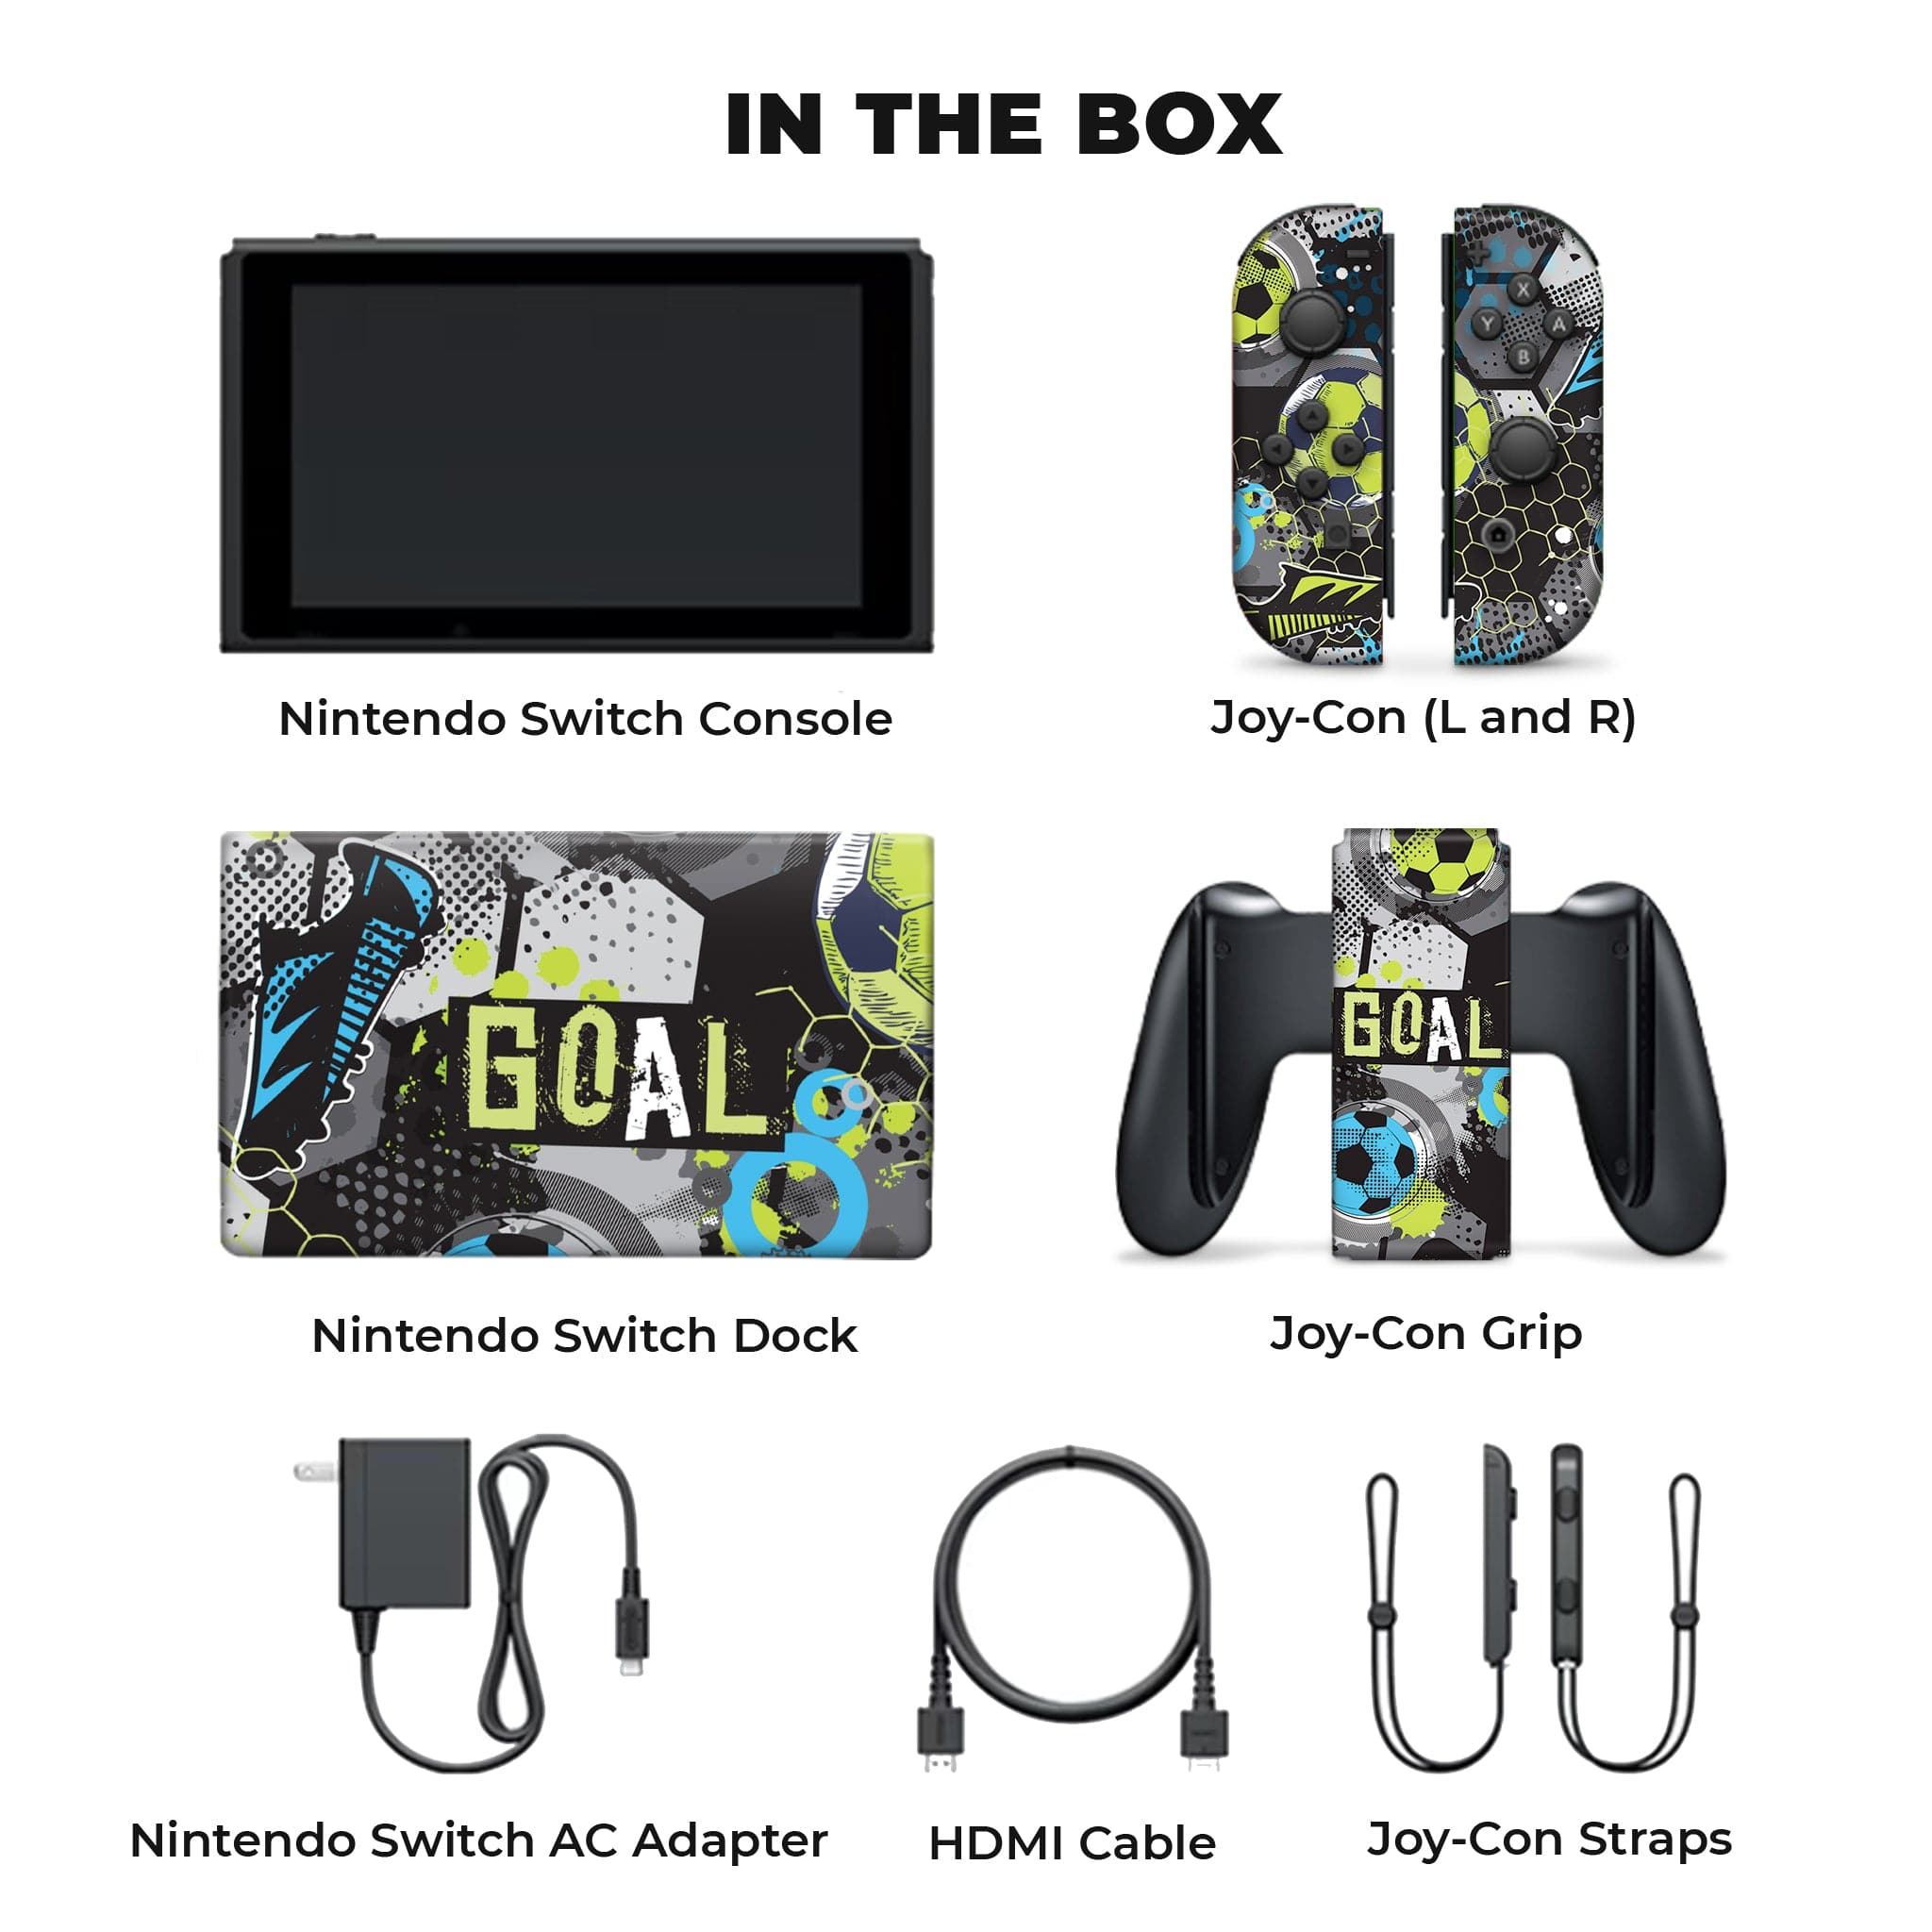 FIFA Inspired Nintendo Switch Full Set by Nintendo: New Nintendo Switch